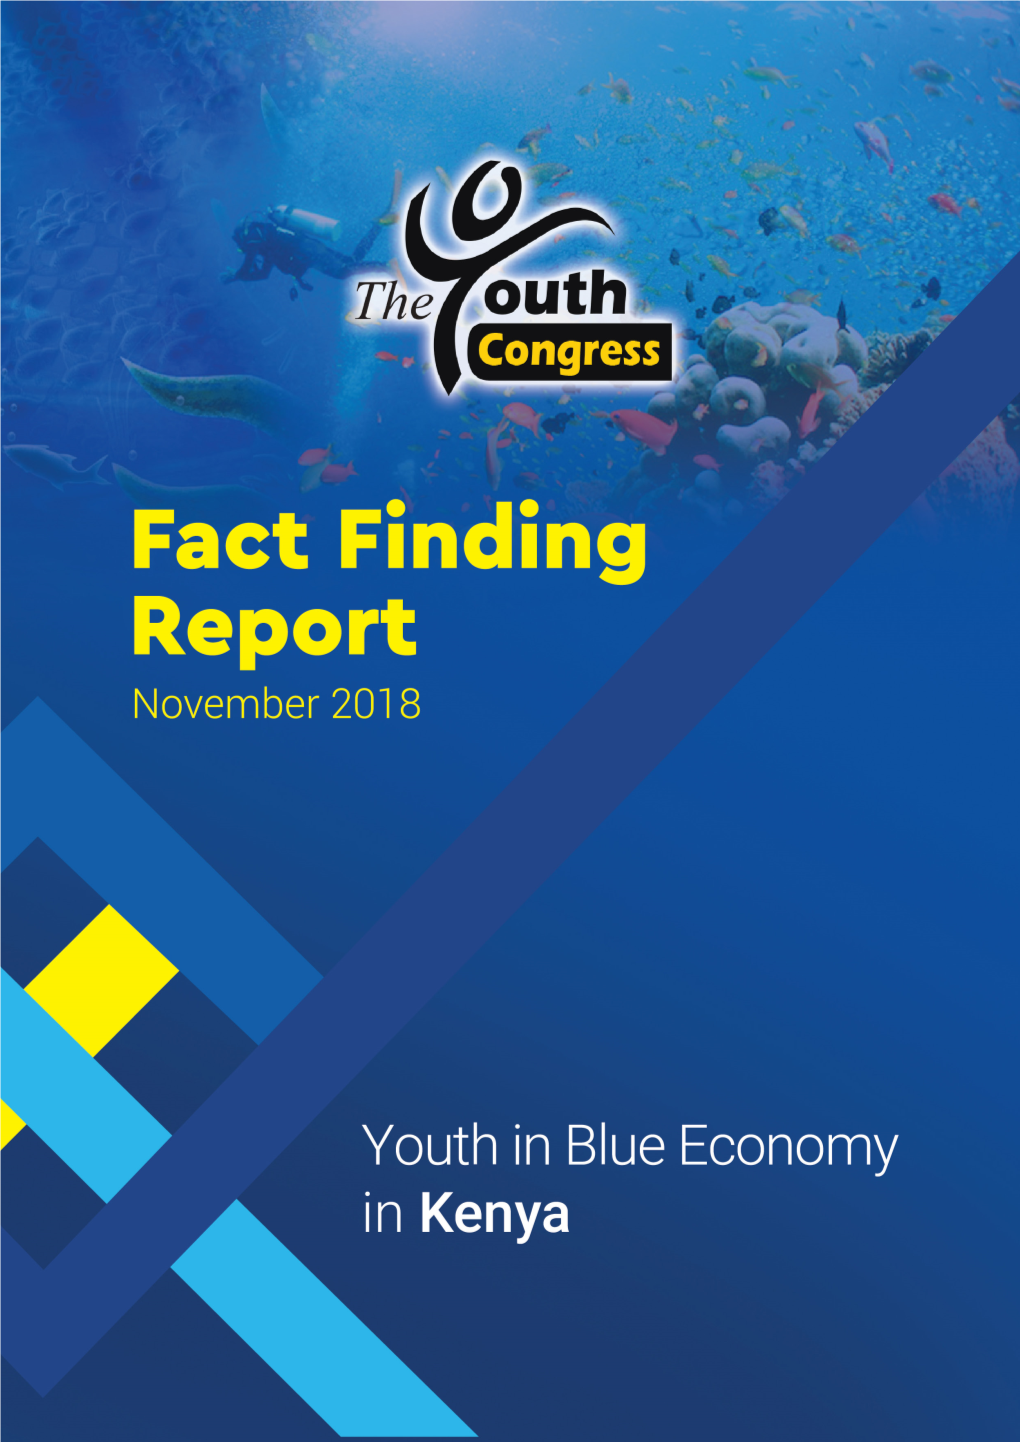 Youth in Blue Economy in Kenya